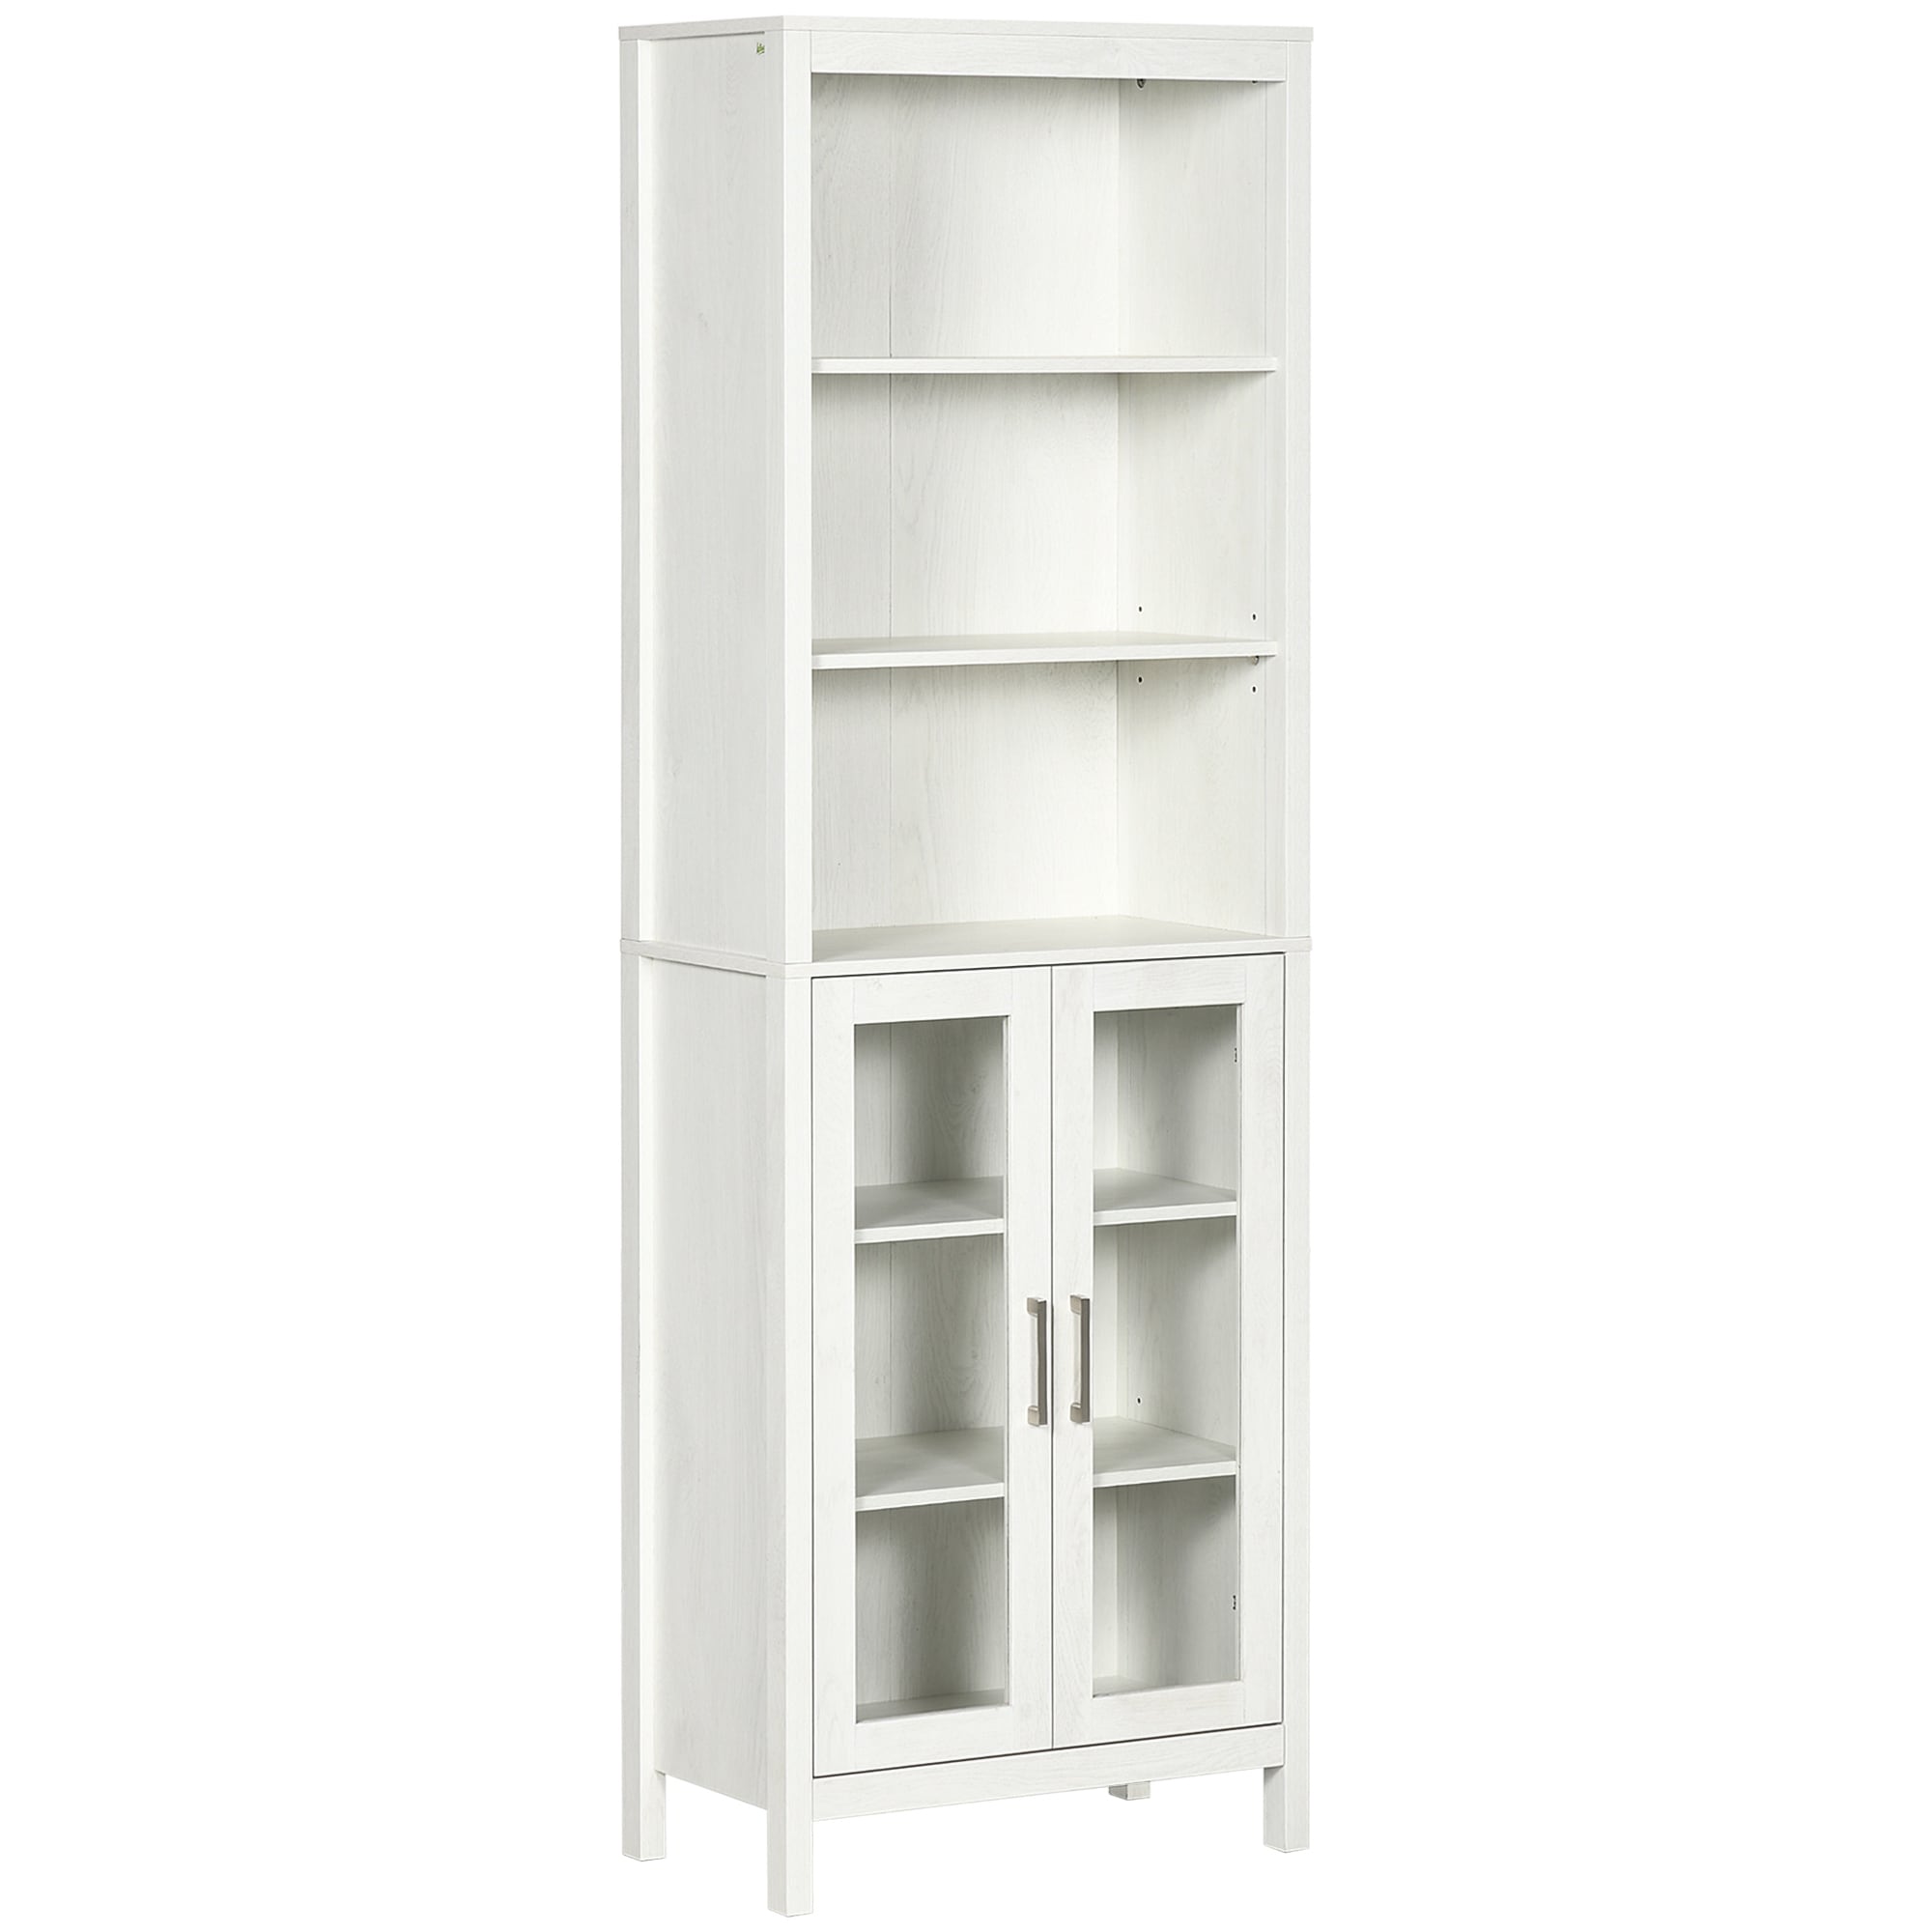 kleankin Tall Bathroom Storage Cabinet, Free Standing Bathroom Cabinet Slim  Side Organizer w/ 3-Tier Shelf, Bamboo Door, White